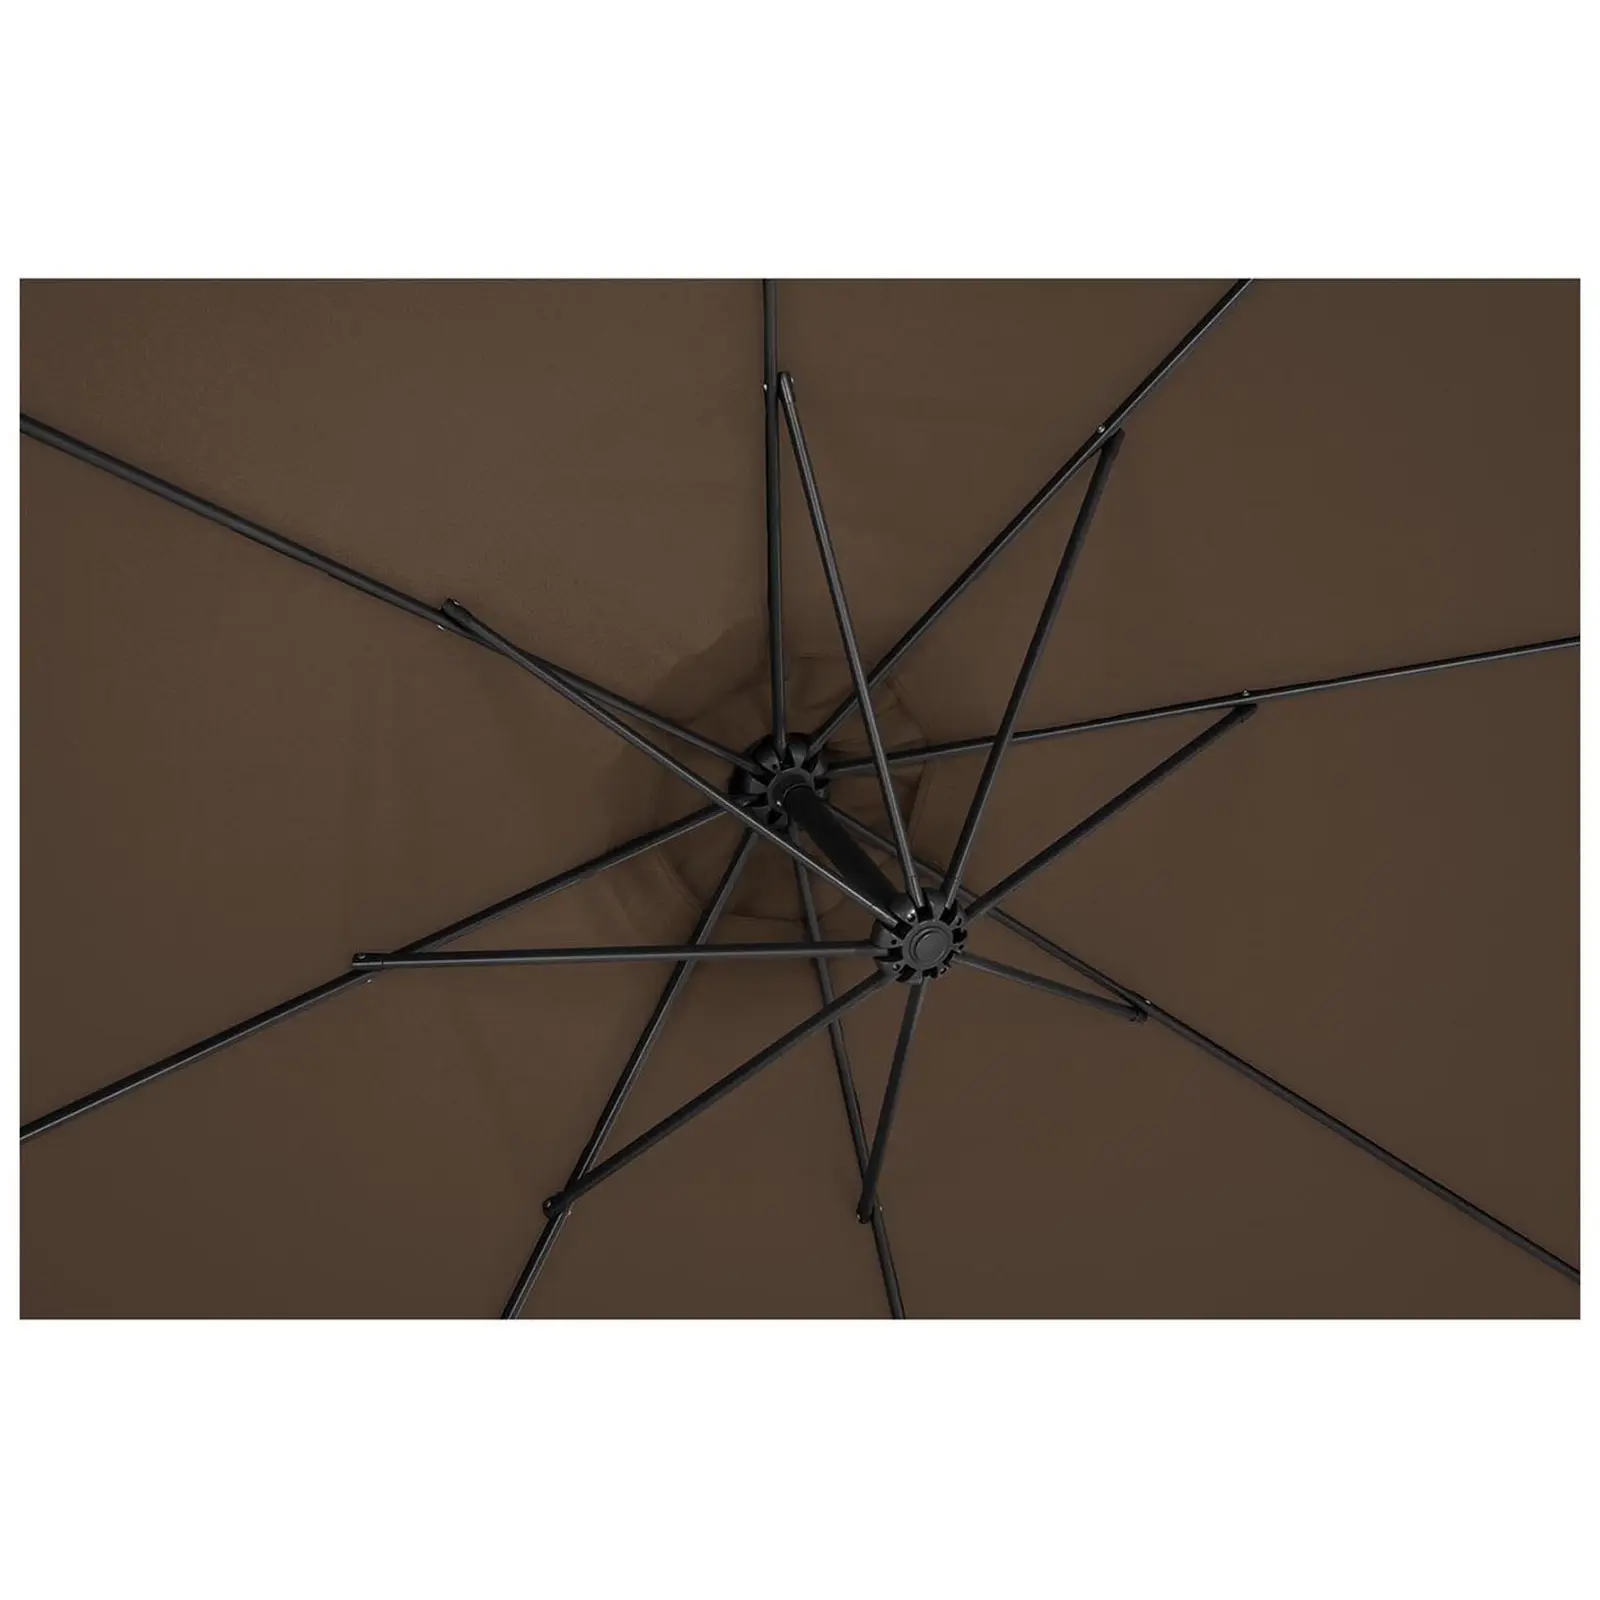 Hængeparasol - brun - rund - 300 cm i diameter